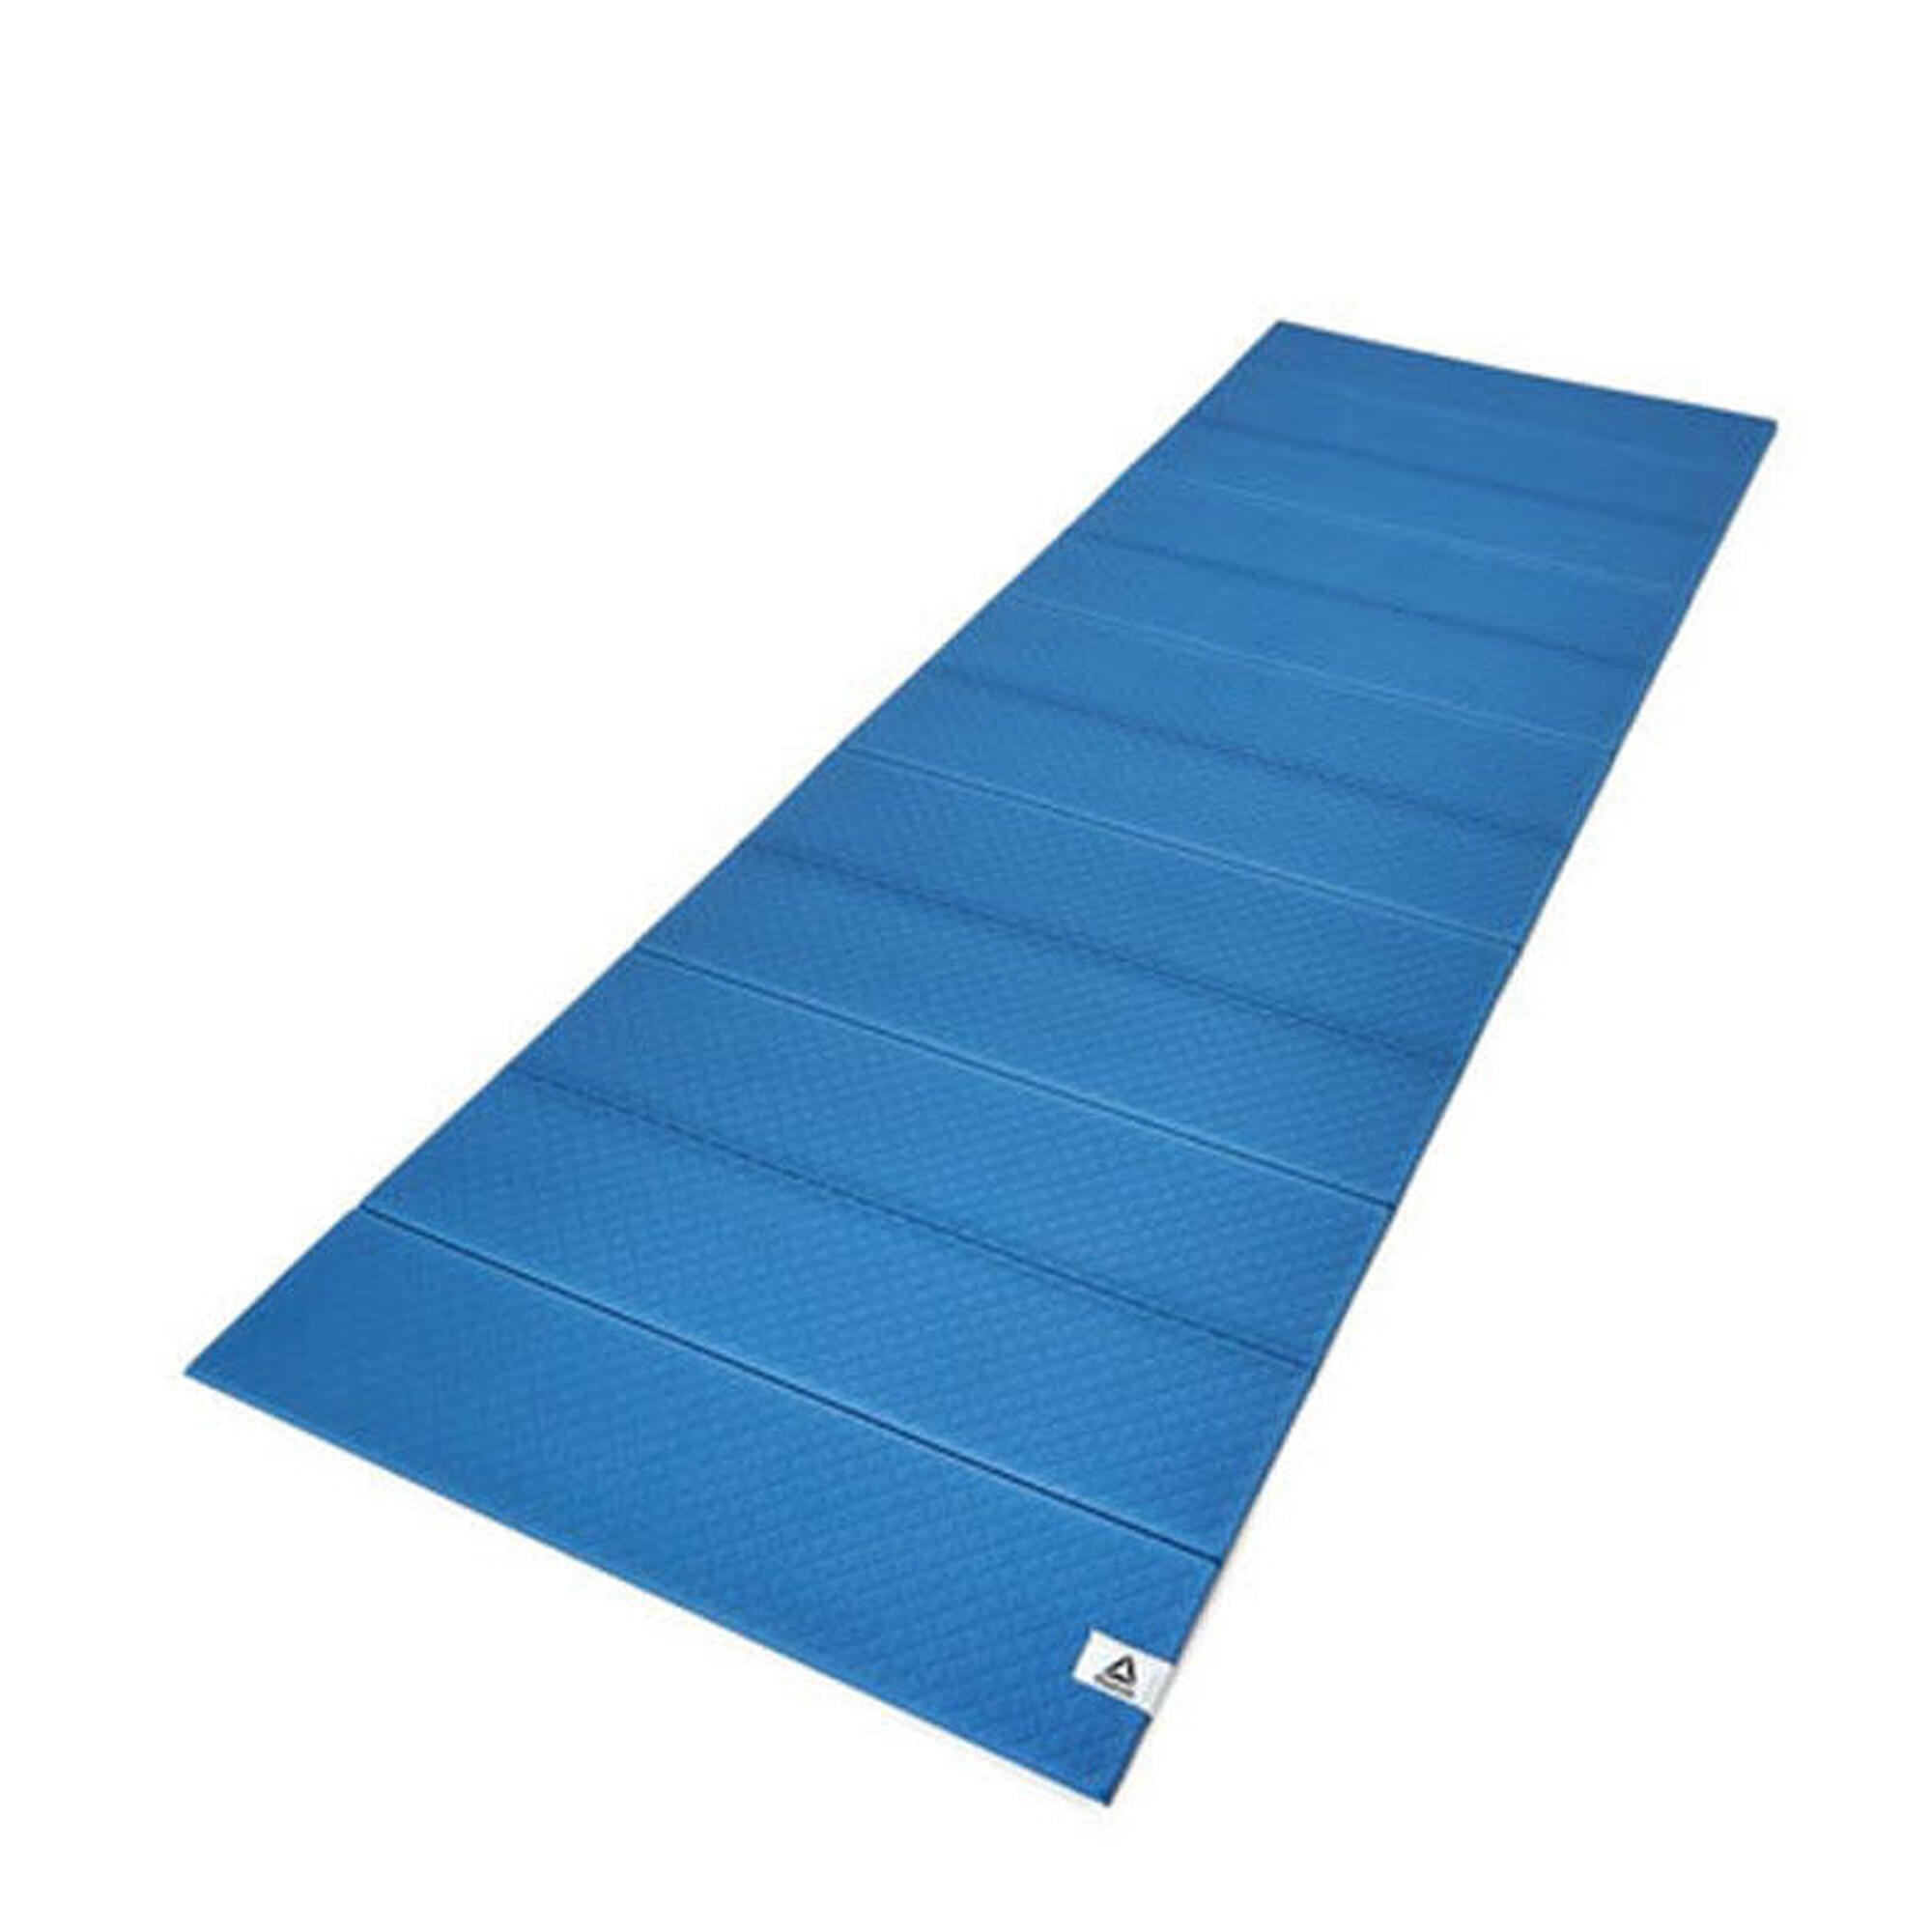 Tappetino Yoga pieghevole Reebok - 6 mm - Blu